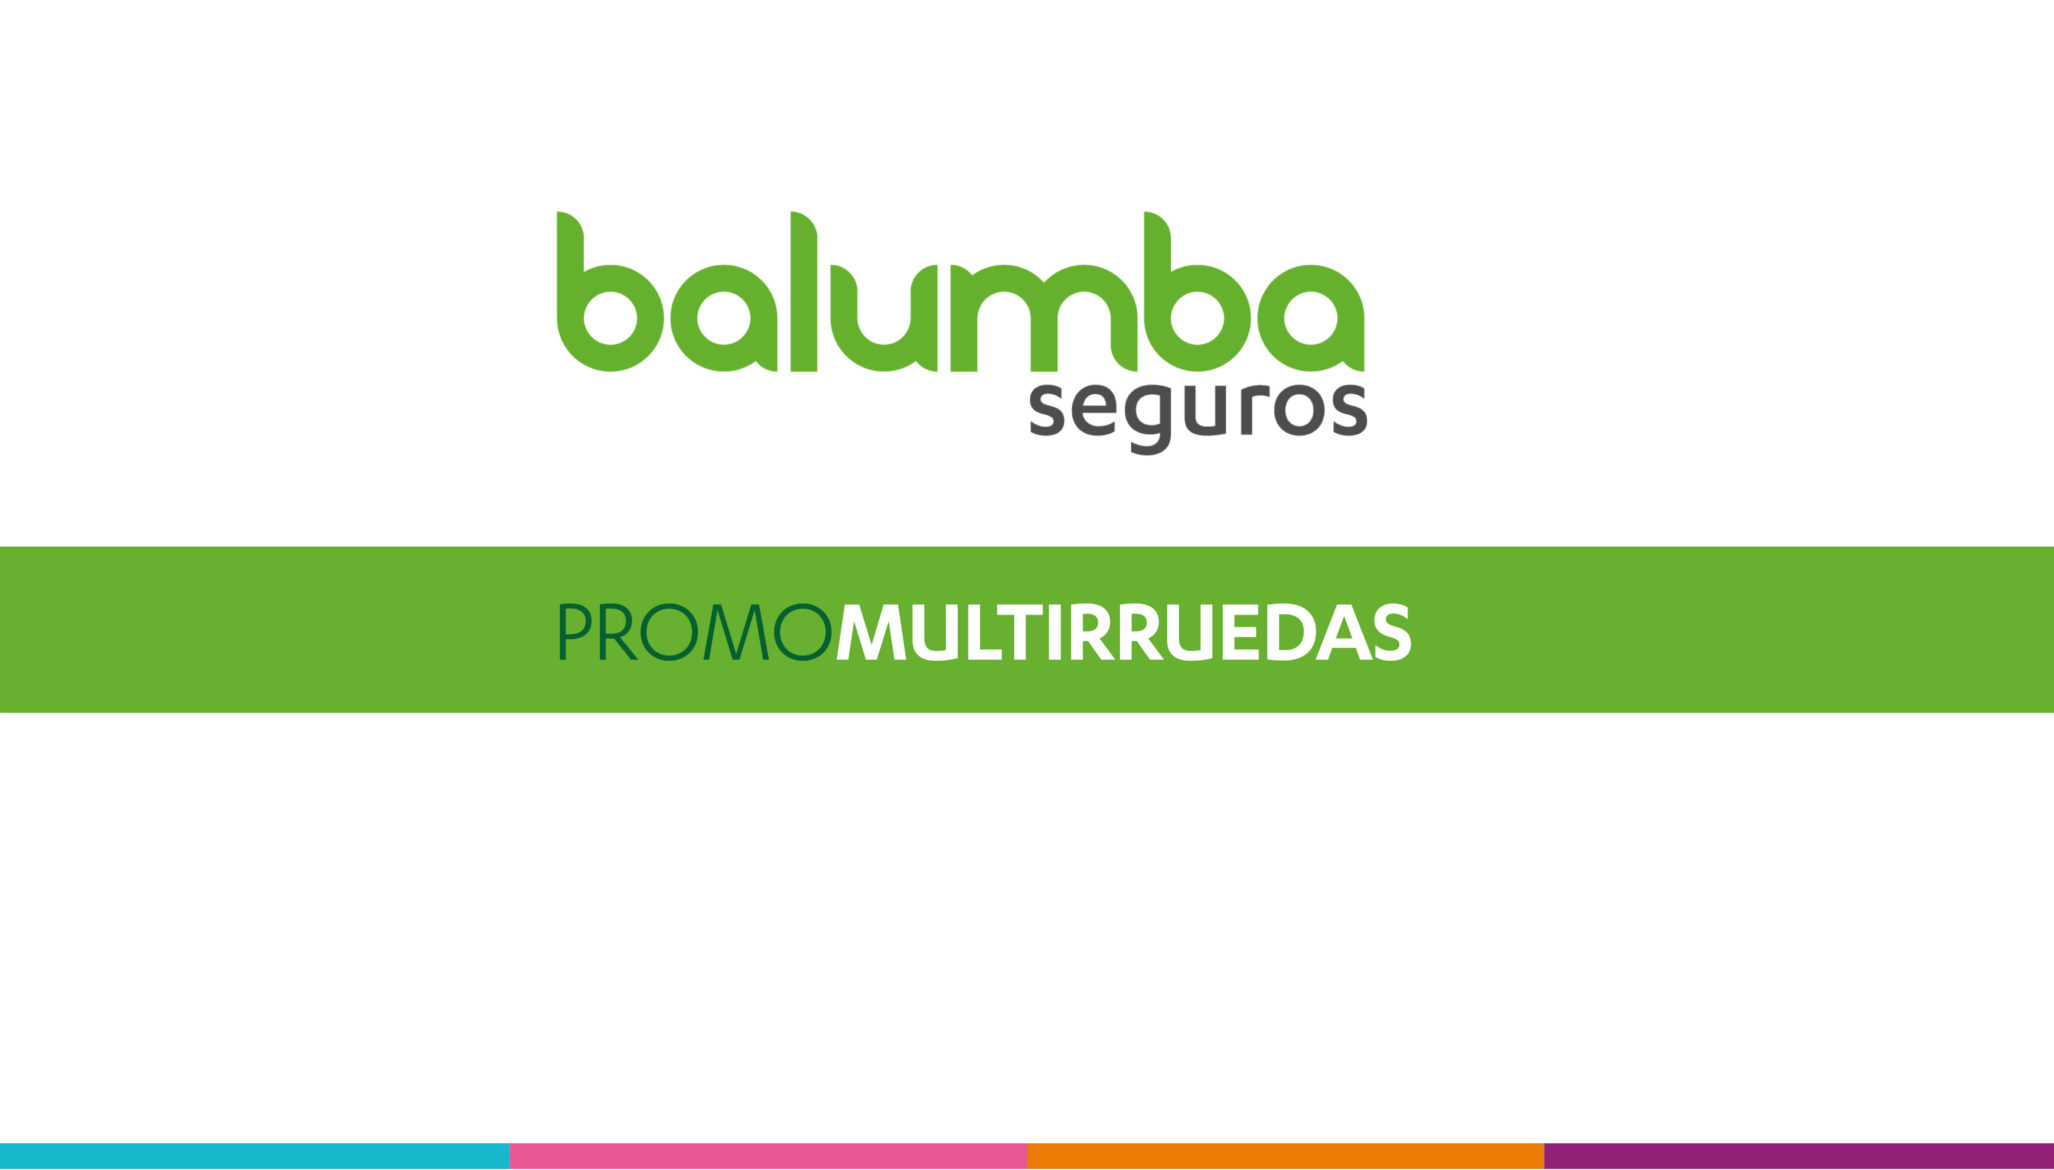 Promo Multirruedas Balumba